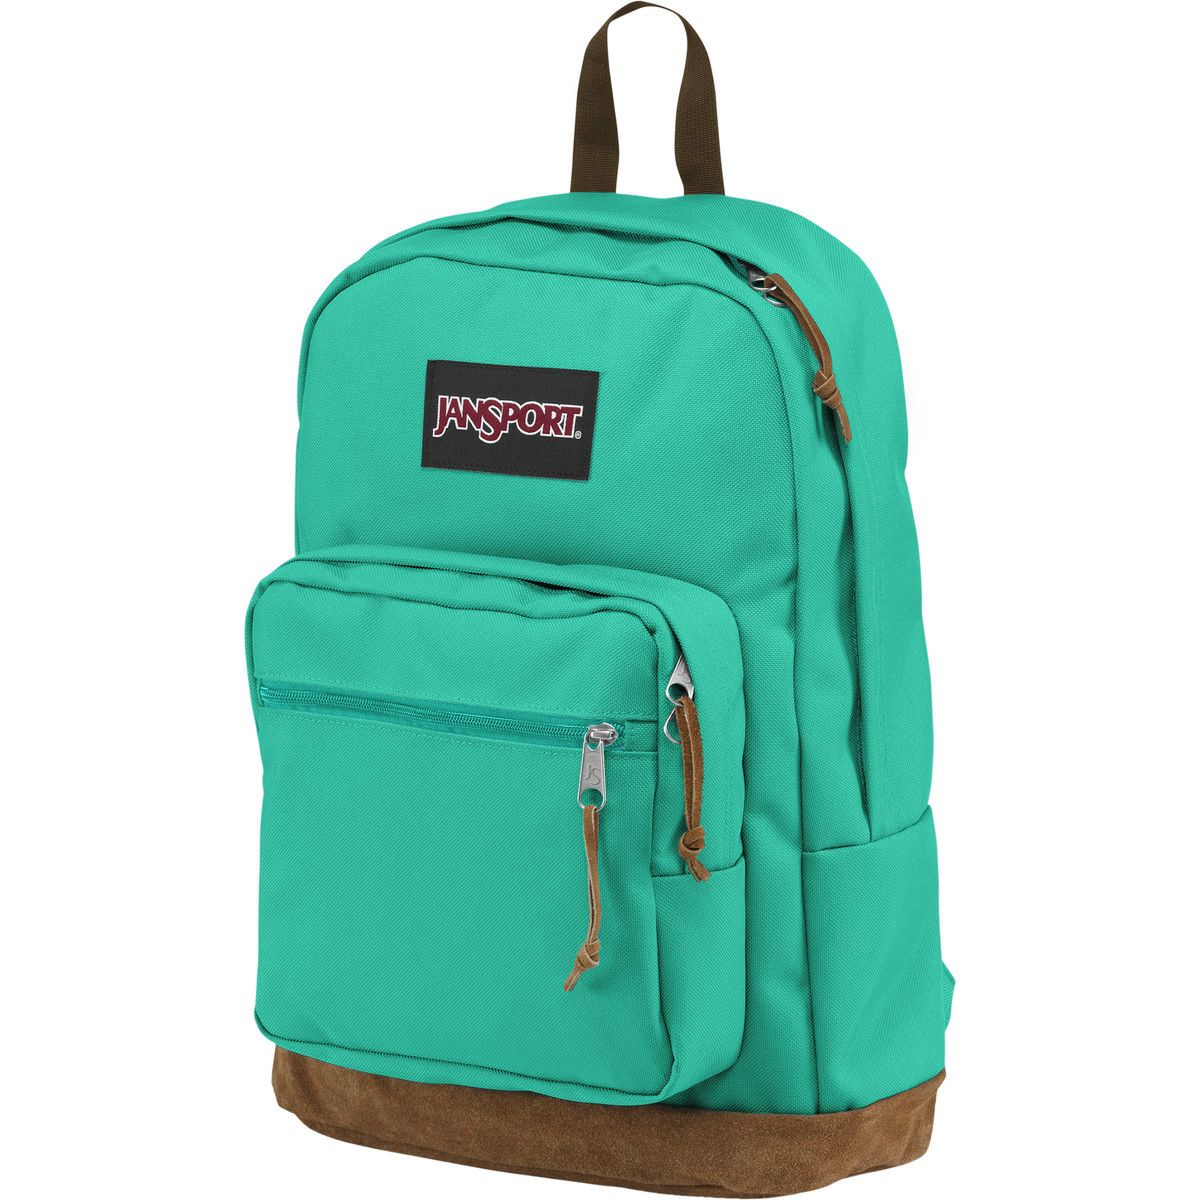 JanSport Right Pack 31L Backpack | eBay